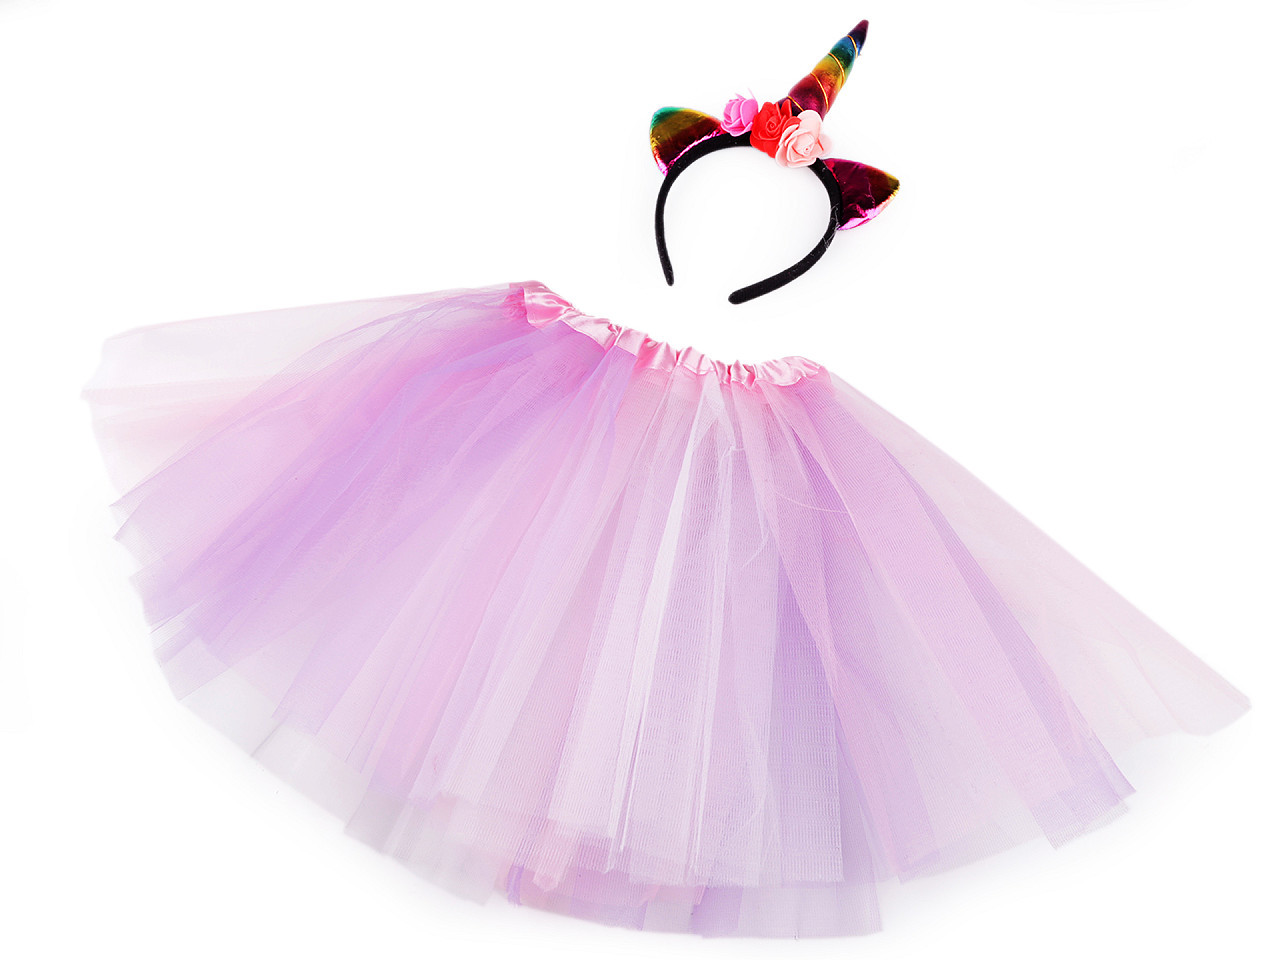 Karnevalový kostým - jednorožec, barva 1 růžová sv. fialová